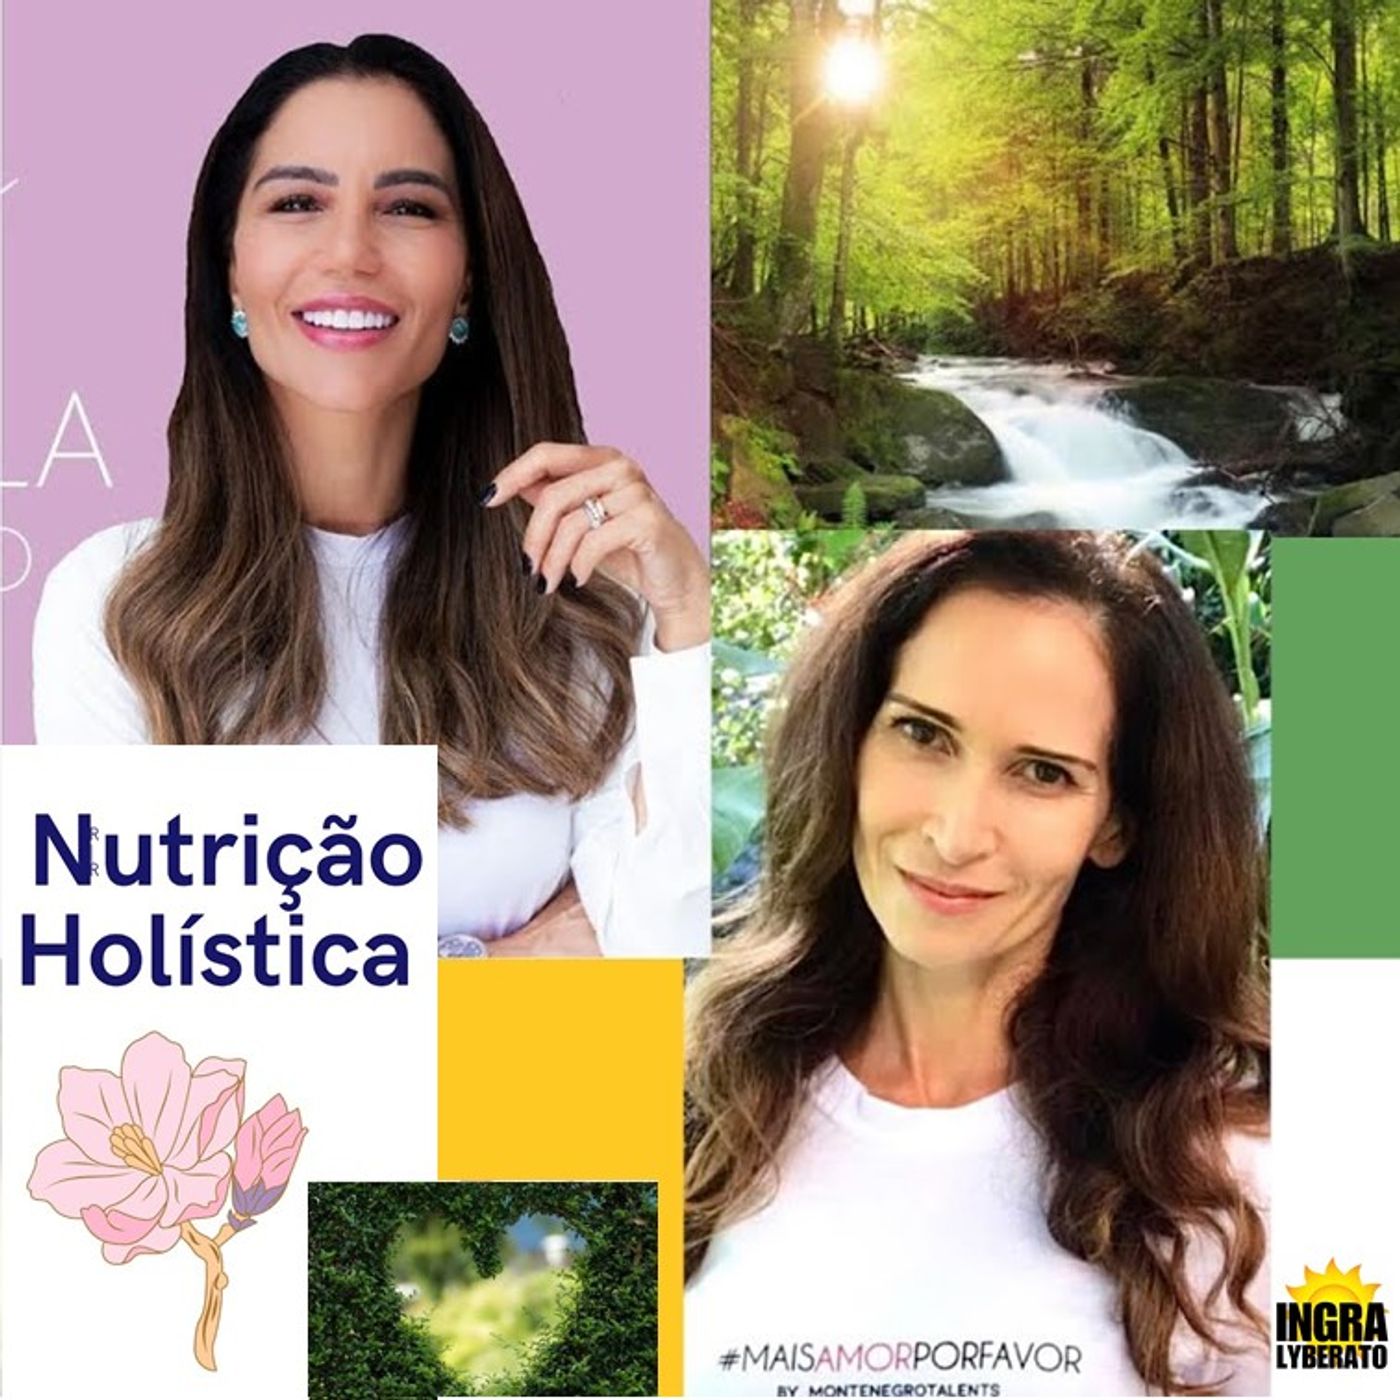 Podcast: Nutrição Holística - Ingra Lyberato recebe Isabella Vorccaro pela Awísuperfoods.